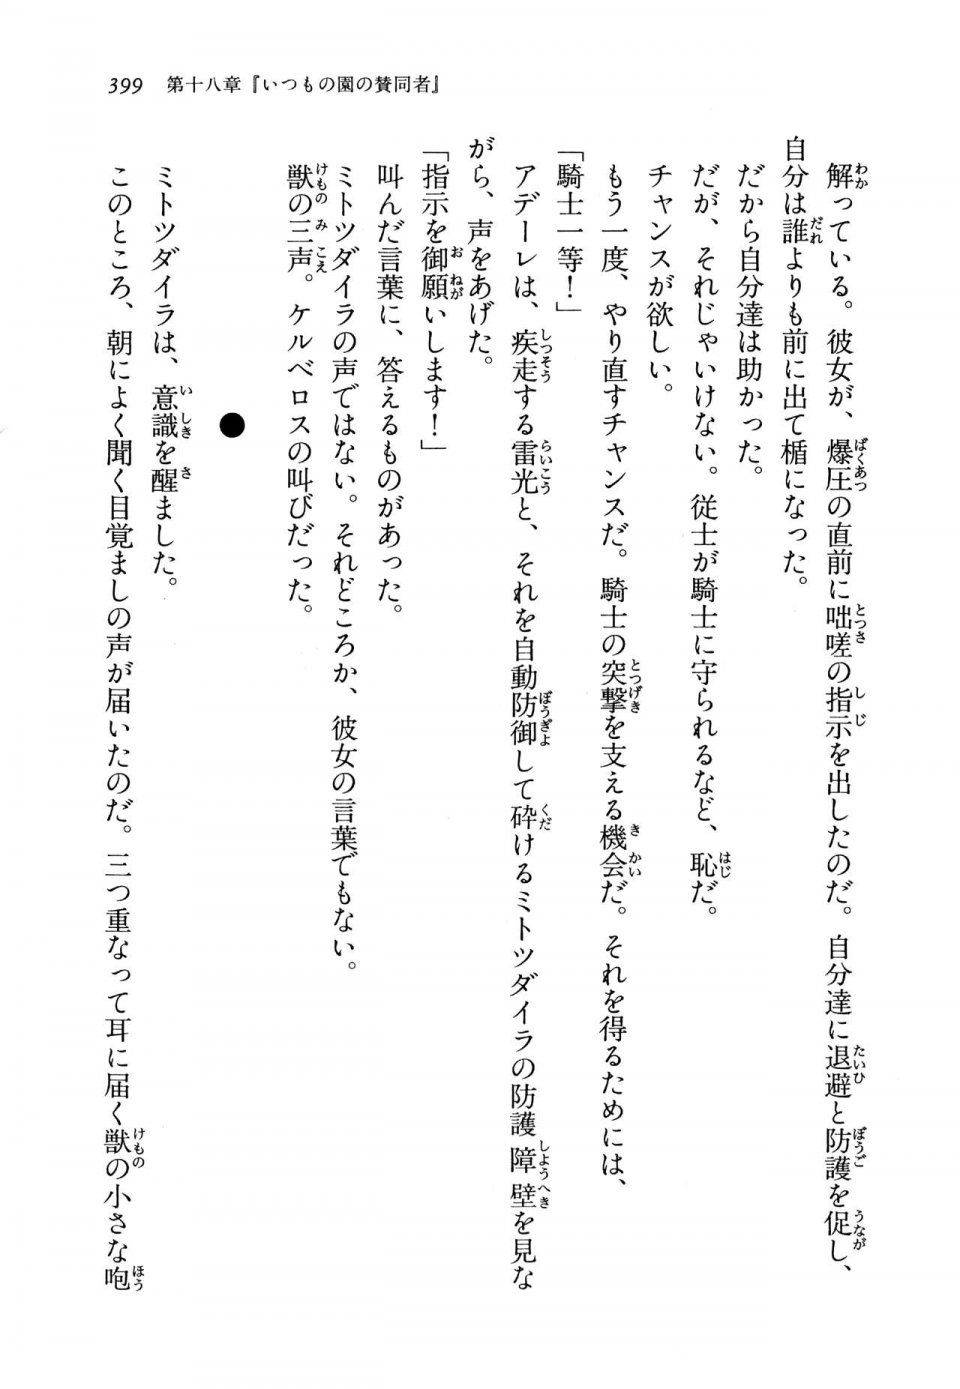 Kyoukai Senjou no Horizon BD Special Mininovel Vol 8(4B) - Photo #403